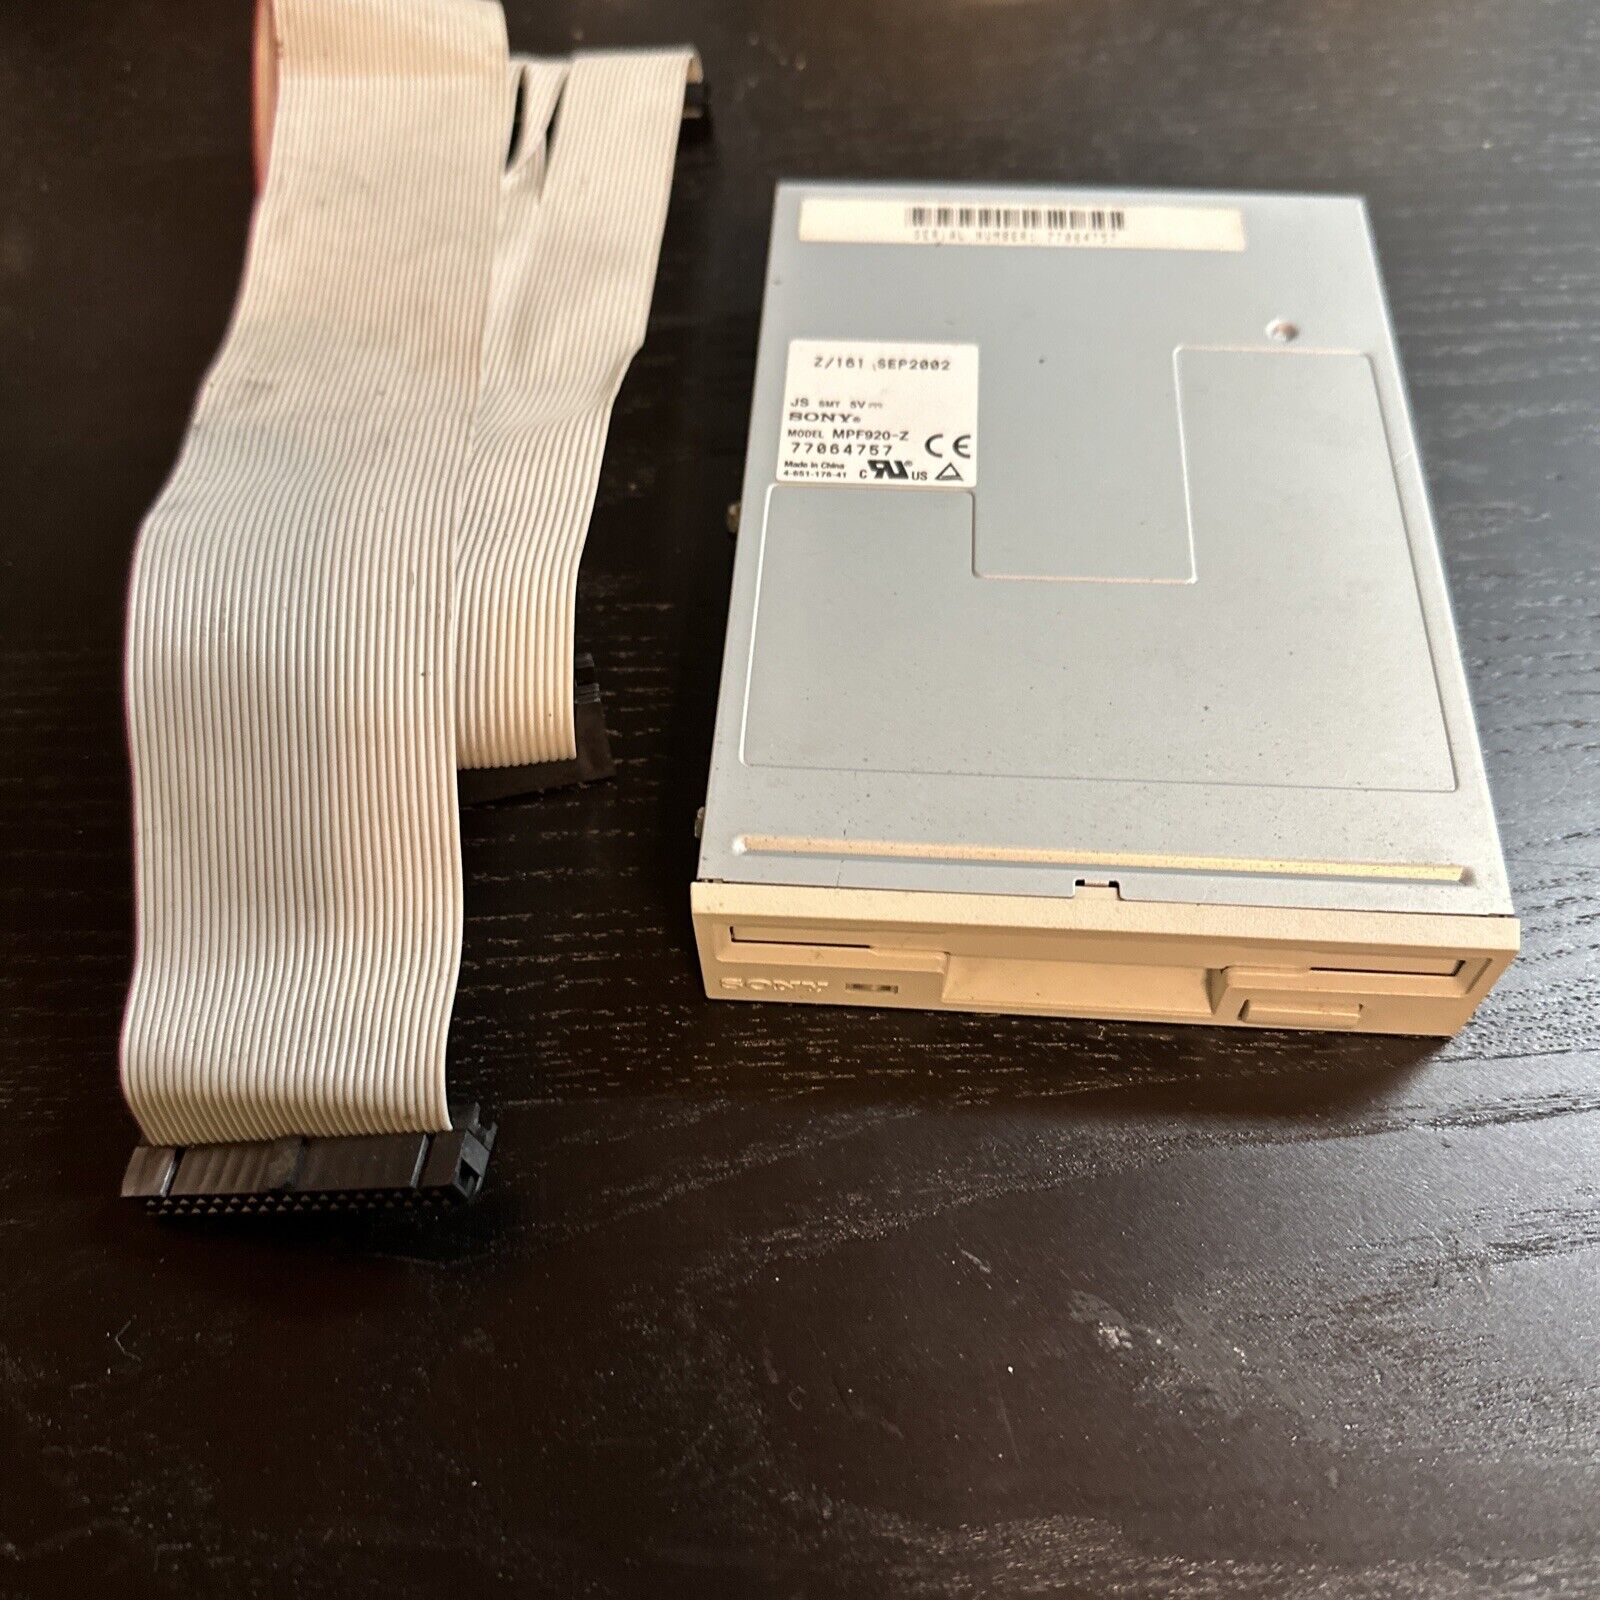 Sony MPF920-Z/161 Gray 1.44MB 3.5 Inch Internal Floppy Disk Drive